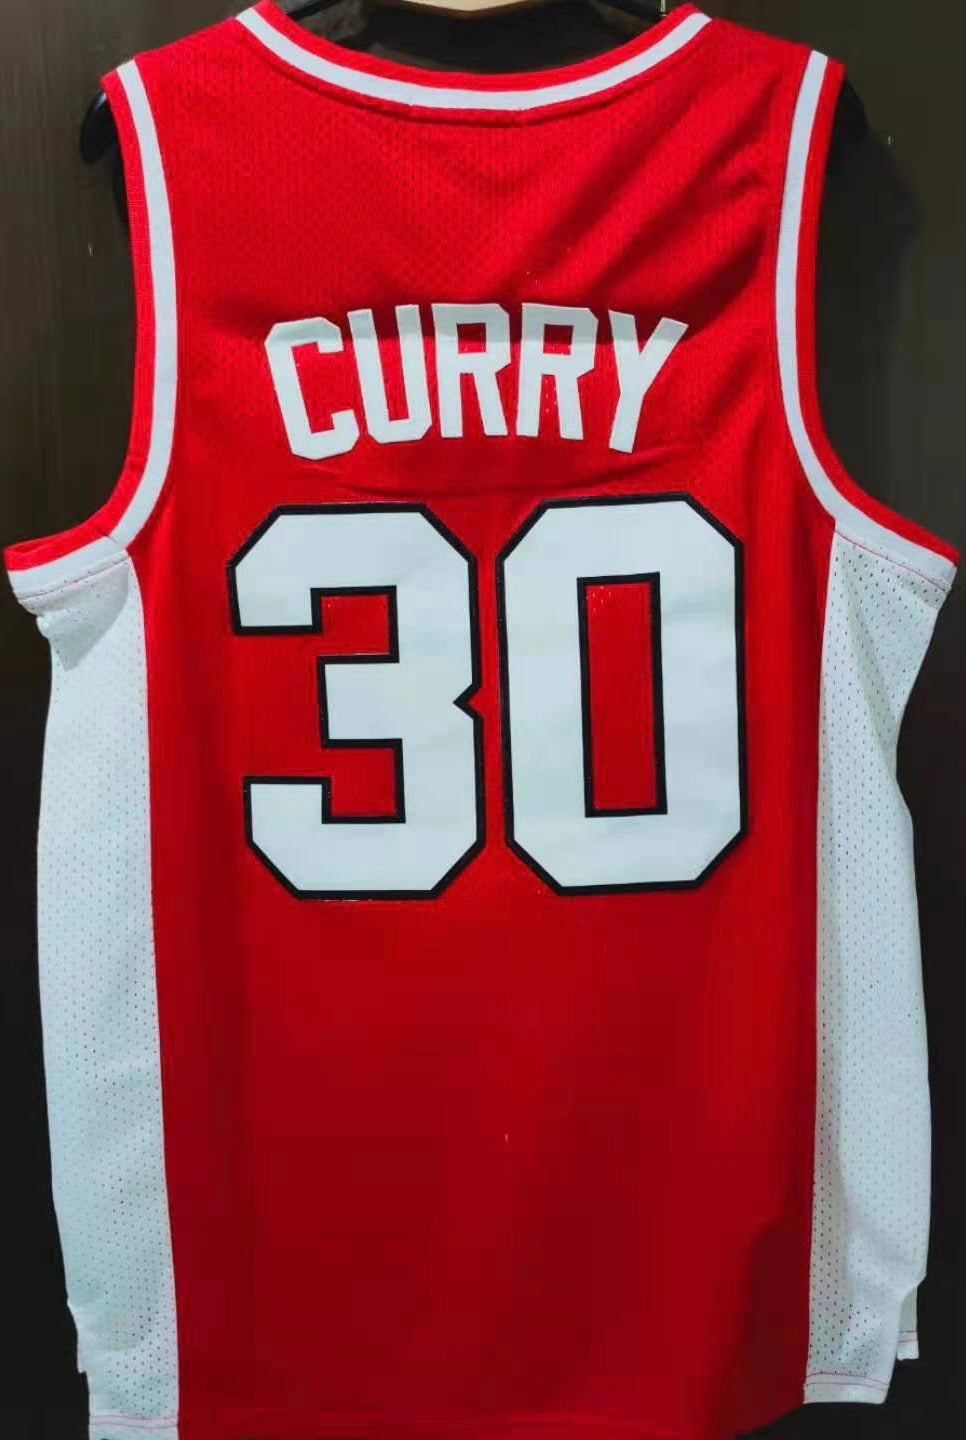 Stephen Curry Jerseys, Stephen Curry Shirts, Merchandise, Gear